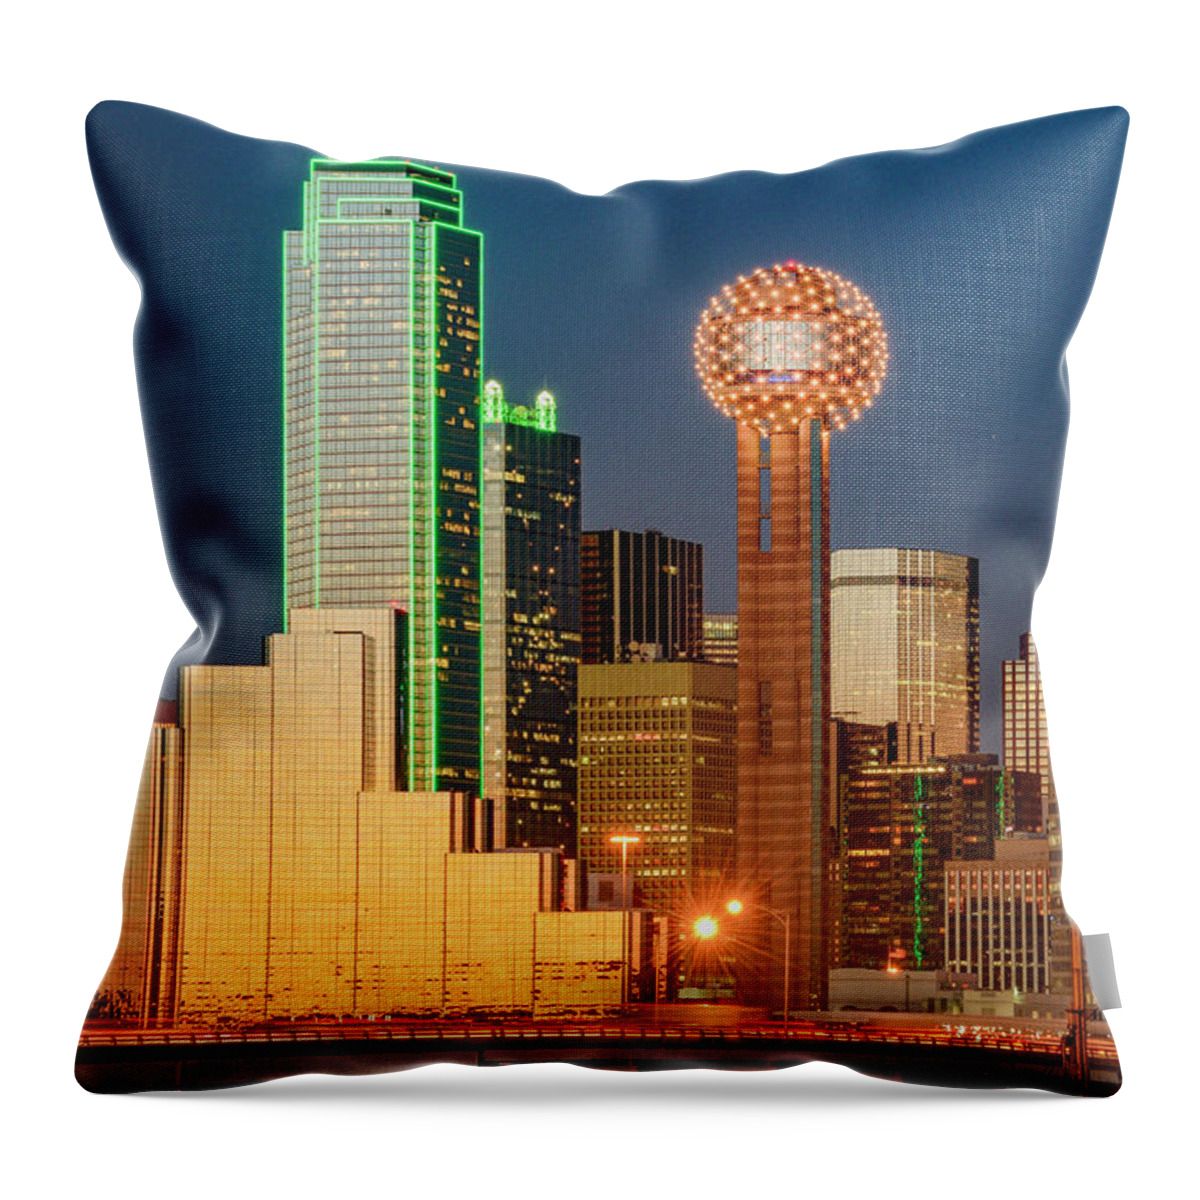 Estock Throw Pillow featuring the digital art Downtown Skyline Dallas, Texas by Heeb Photos